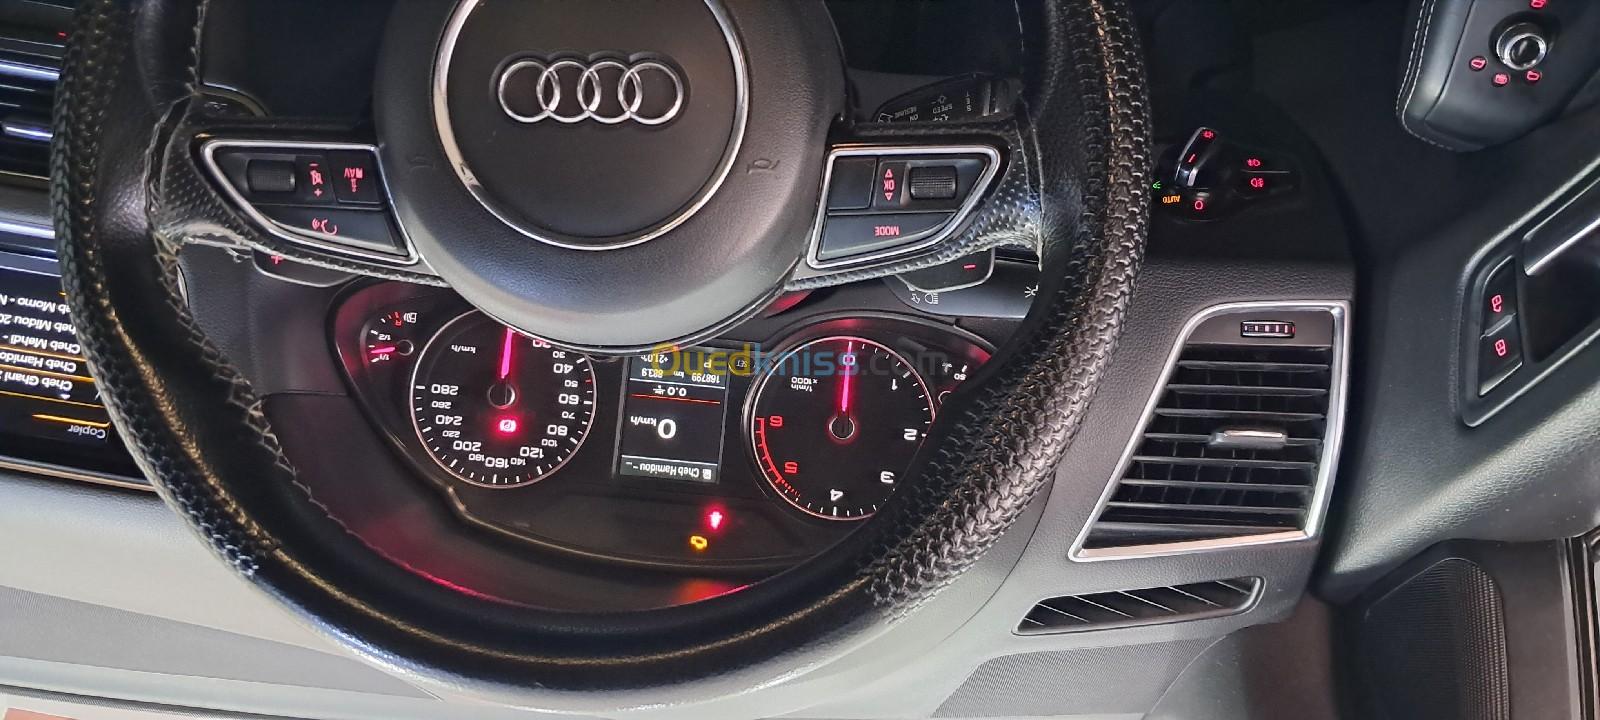 Audi Q5 2016 S Line